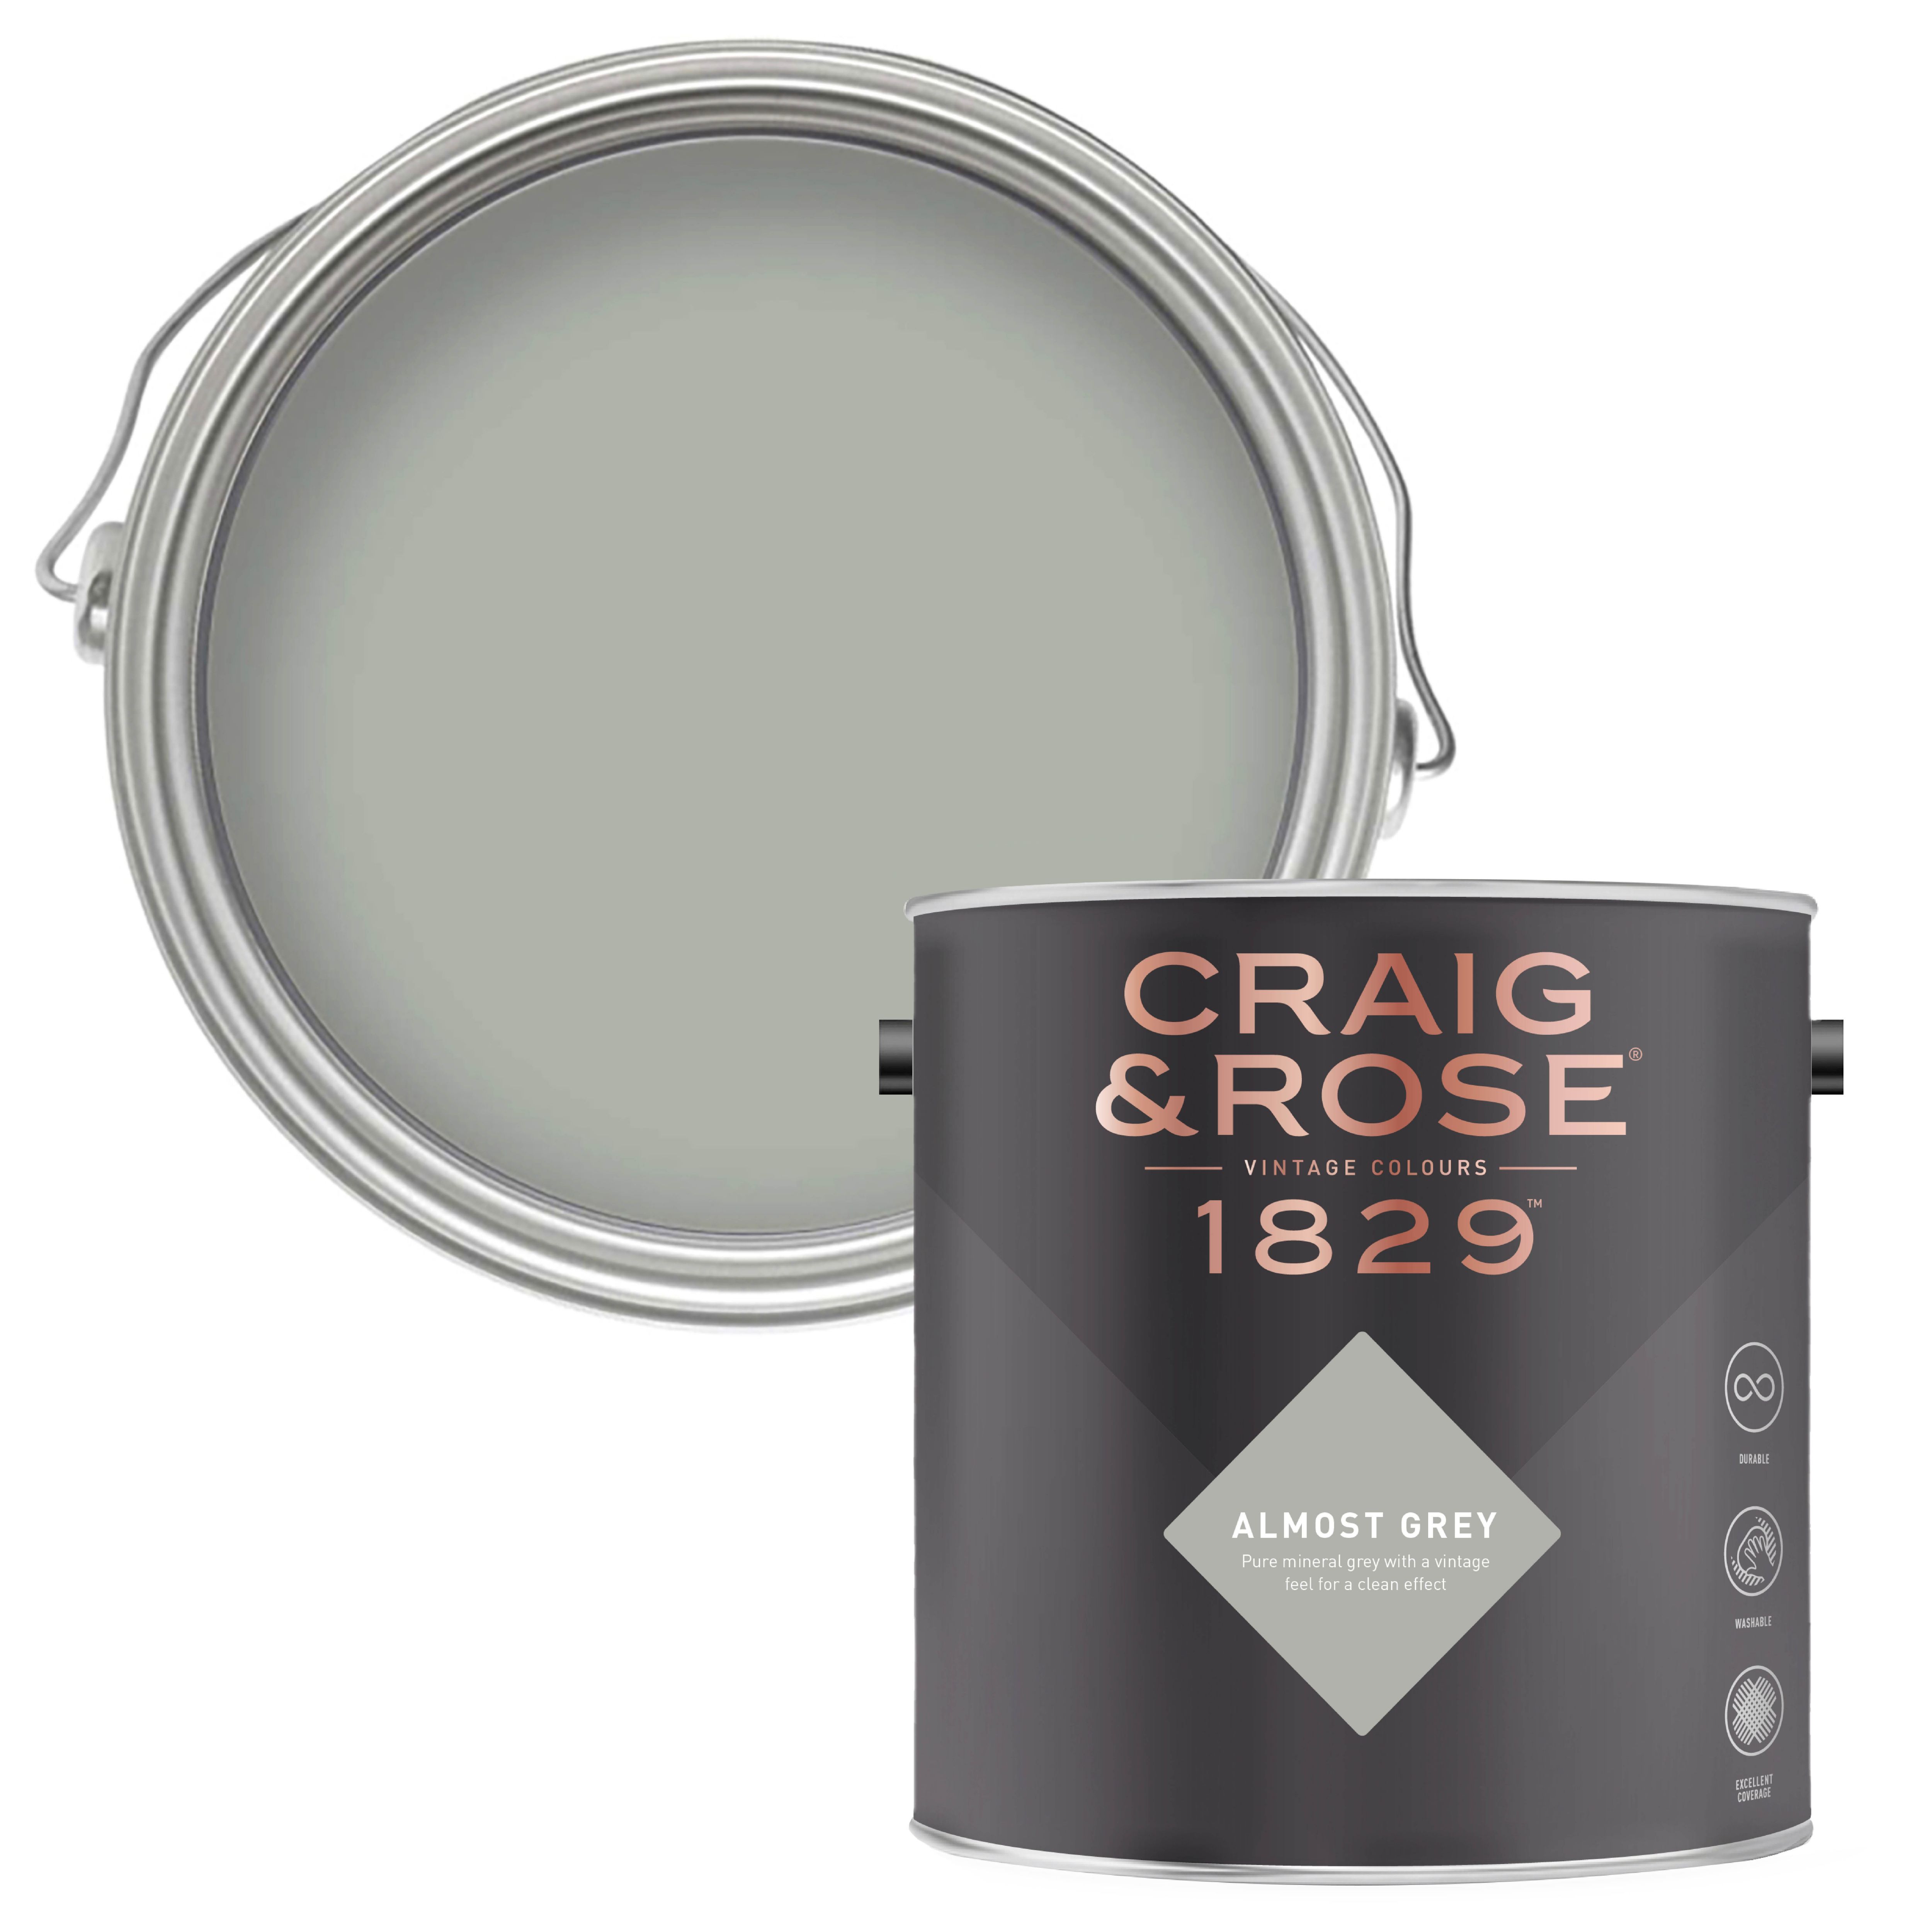 Craig & Rose 1829 White Doe Chalky Emulsion Paint, 2.5L